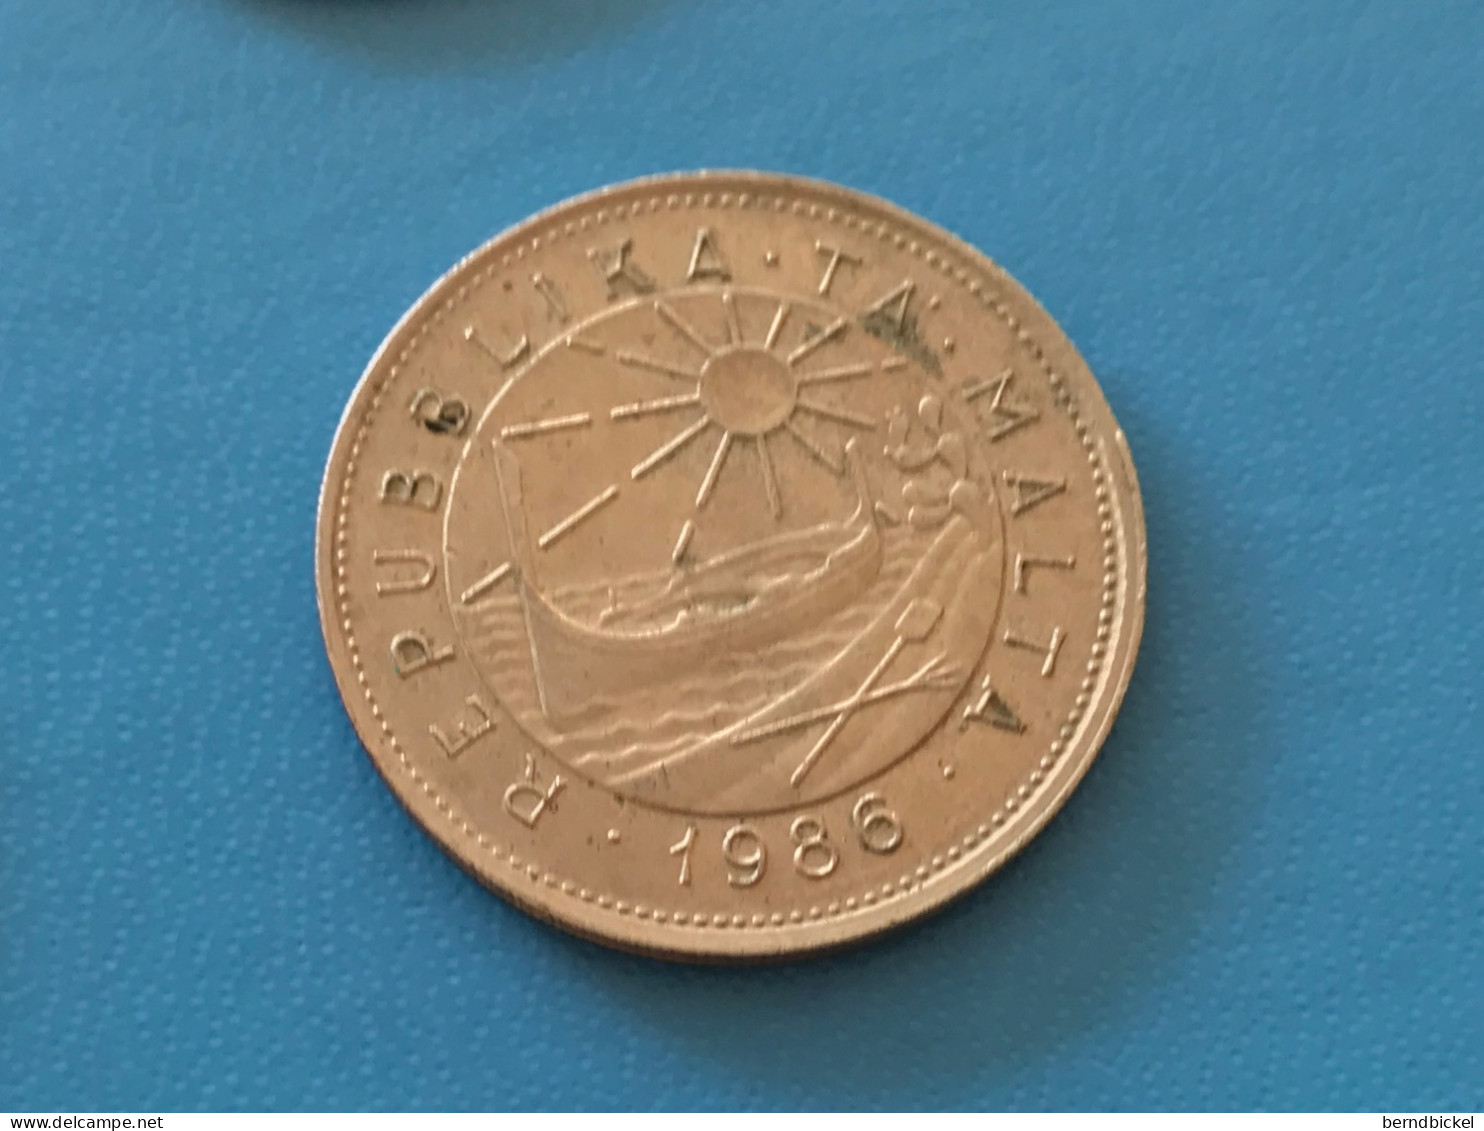 Münze Münzen Umlaufmünze Malta 25 Cent 1986 - Malta